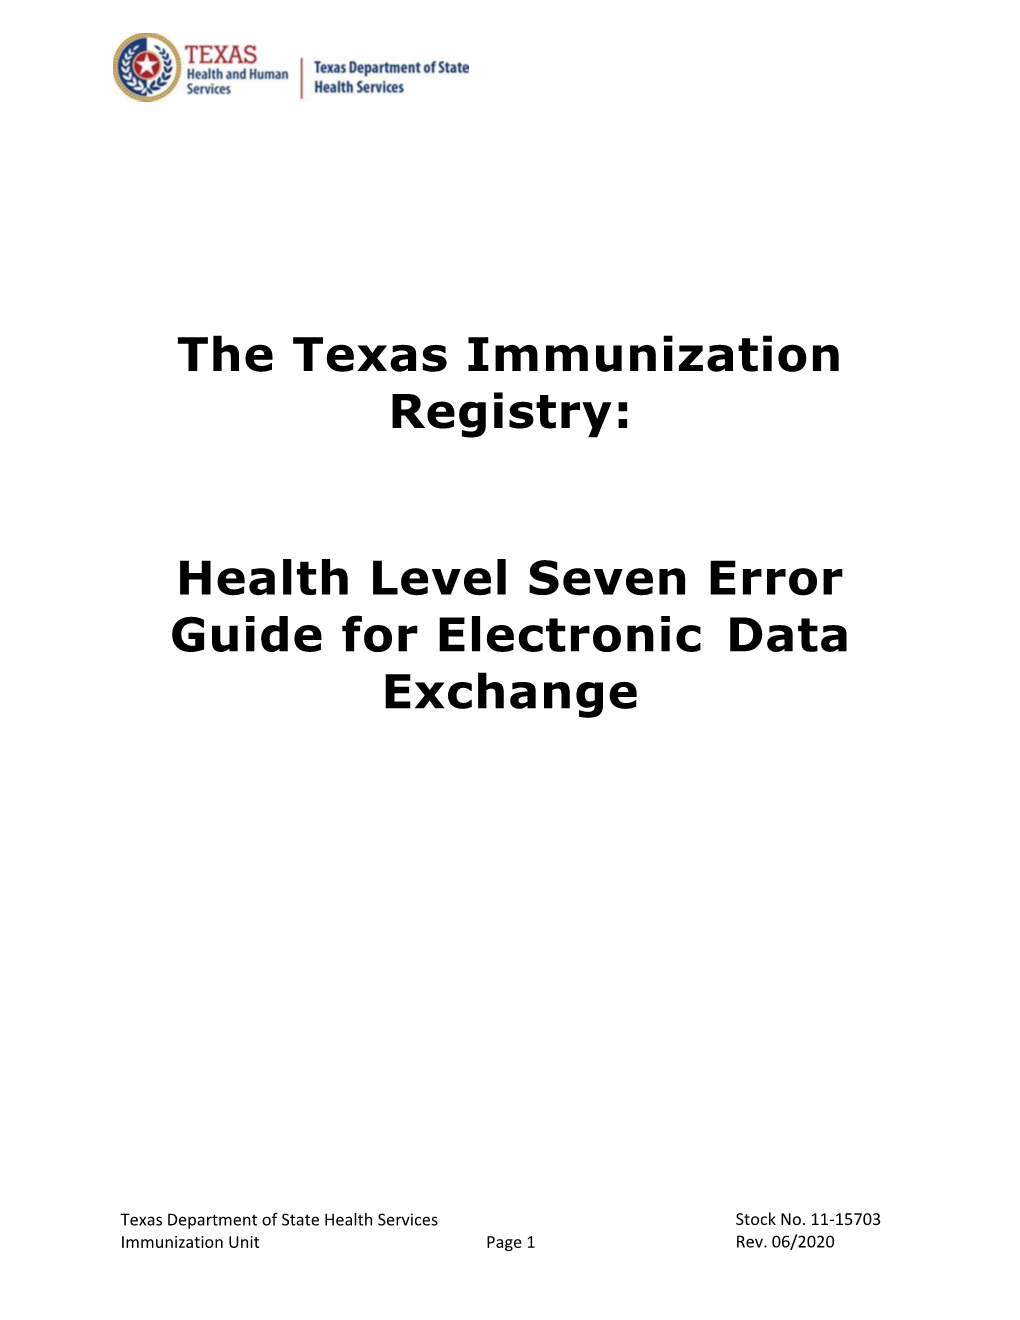 The Texas Immunization Registry: Health Level Seven Error Guide For